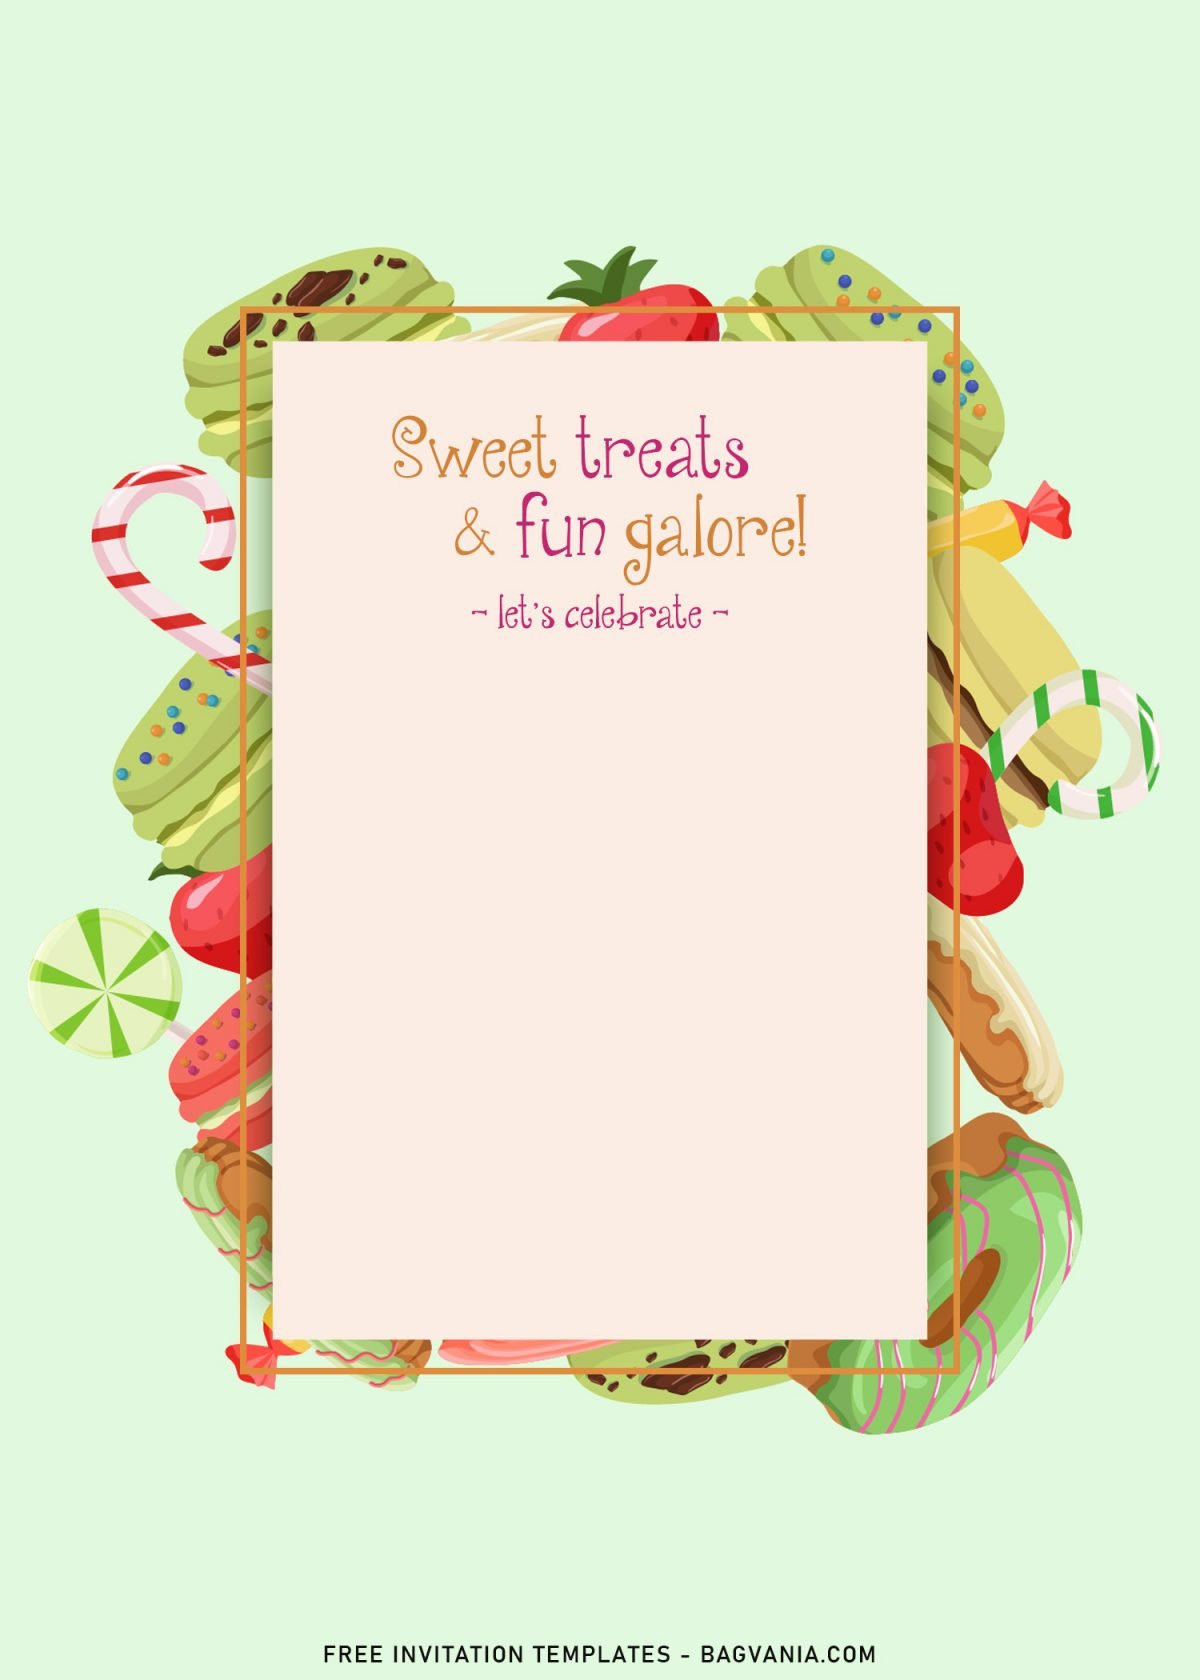 11+ Sweet Treats Fun Galore Birthday Invitation Templates and has yummy desert background